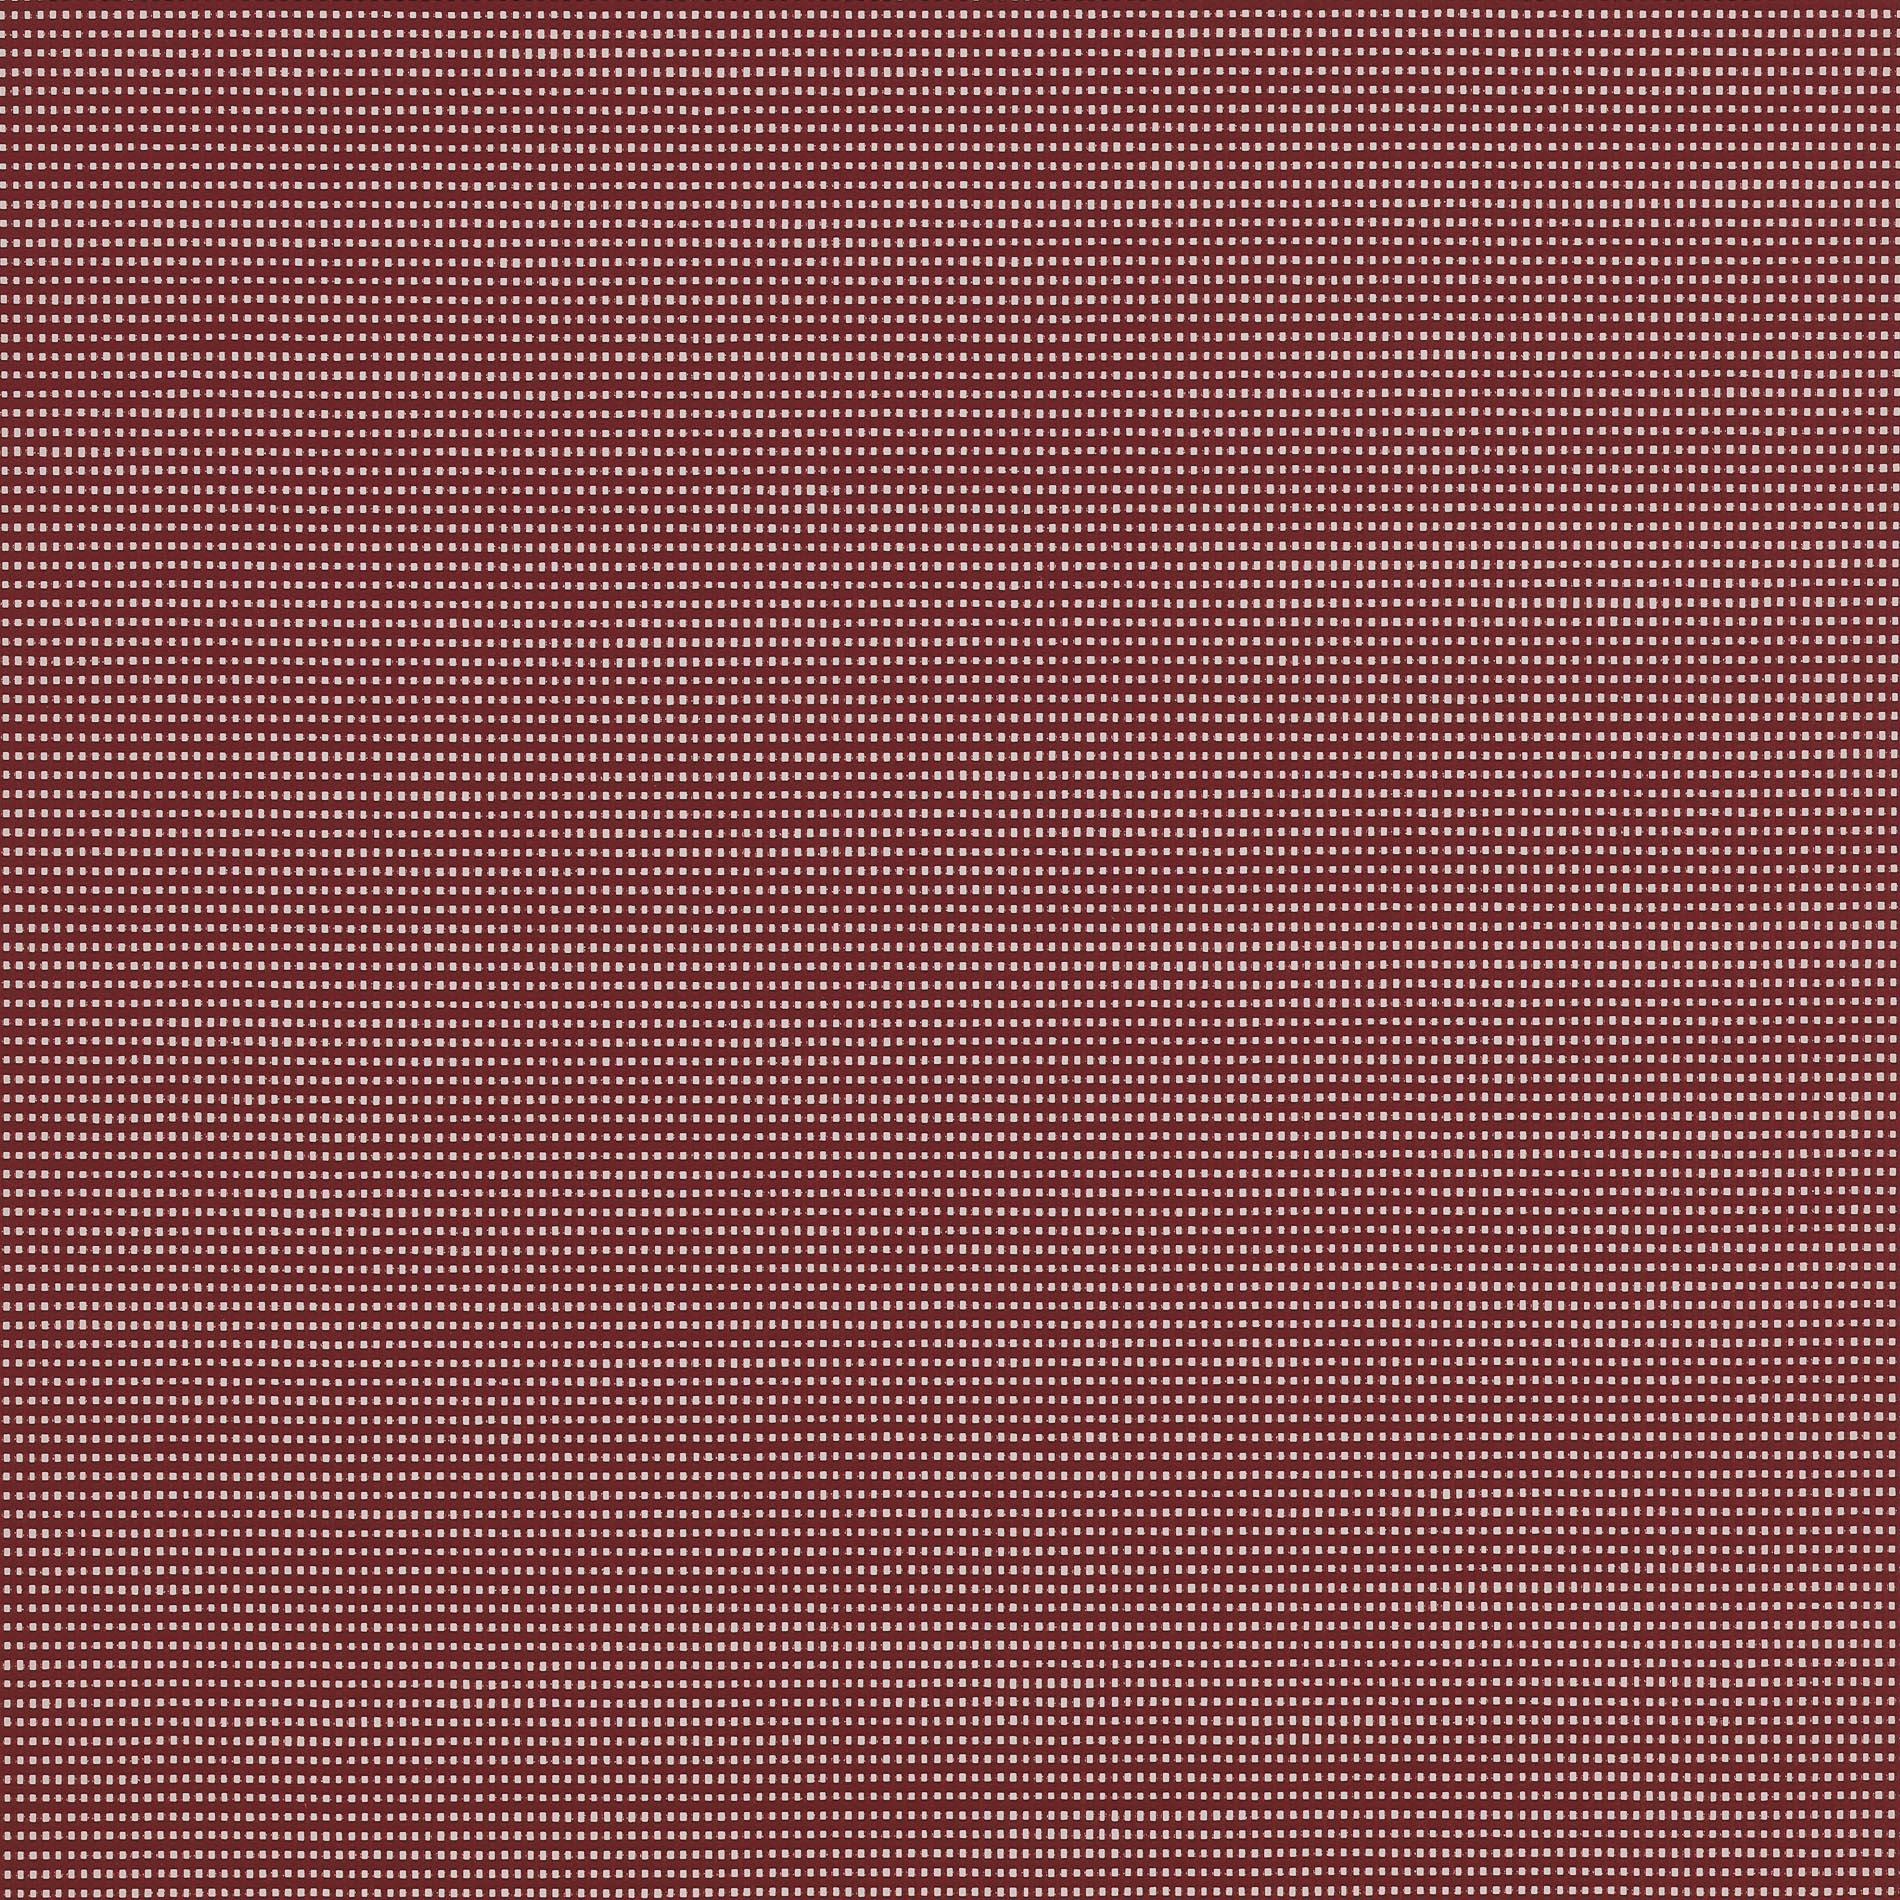 Altex - Fabric - SOLTIS HORIZON 86 - Deep red - 86-51181